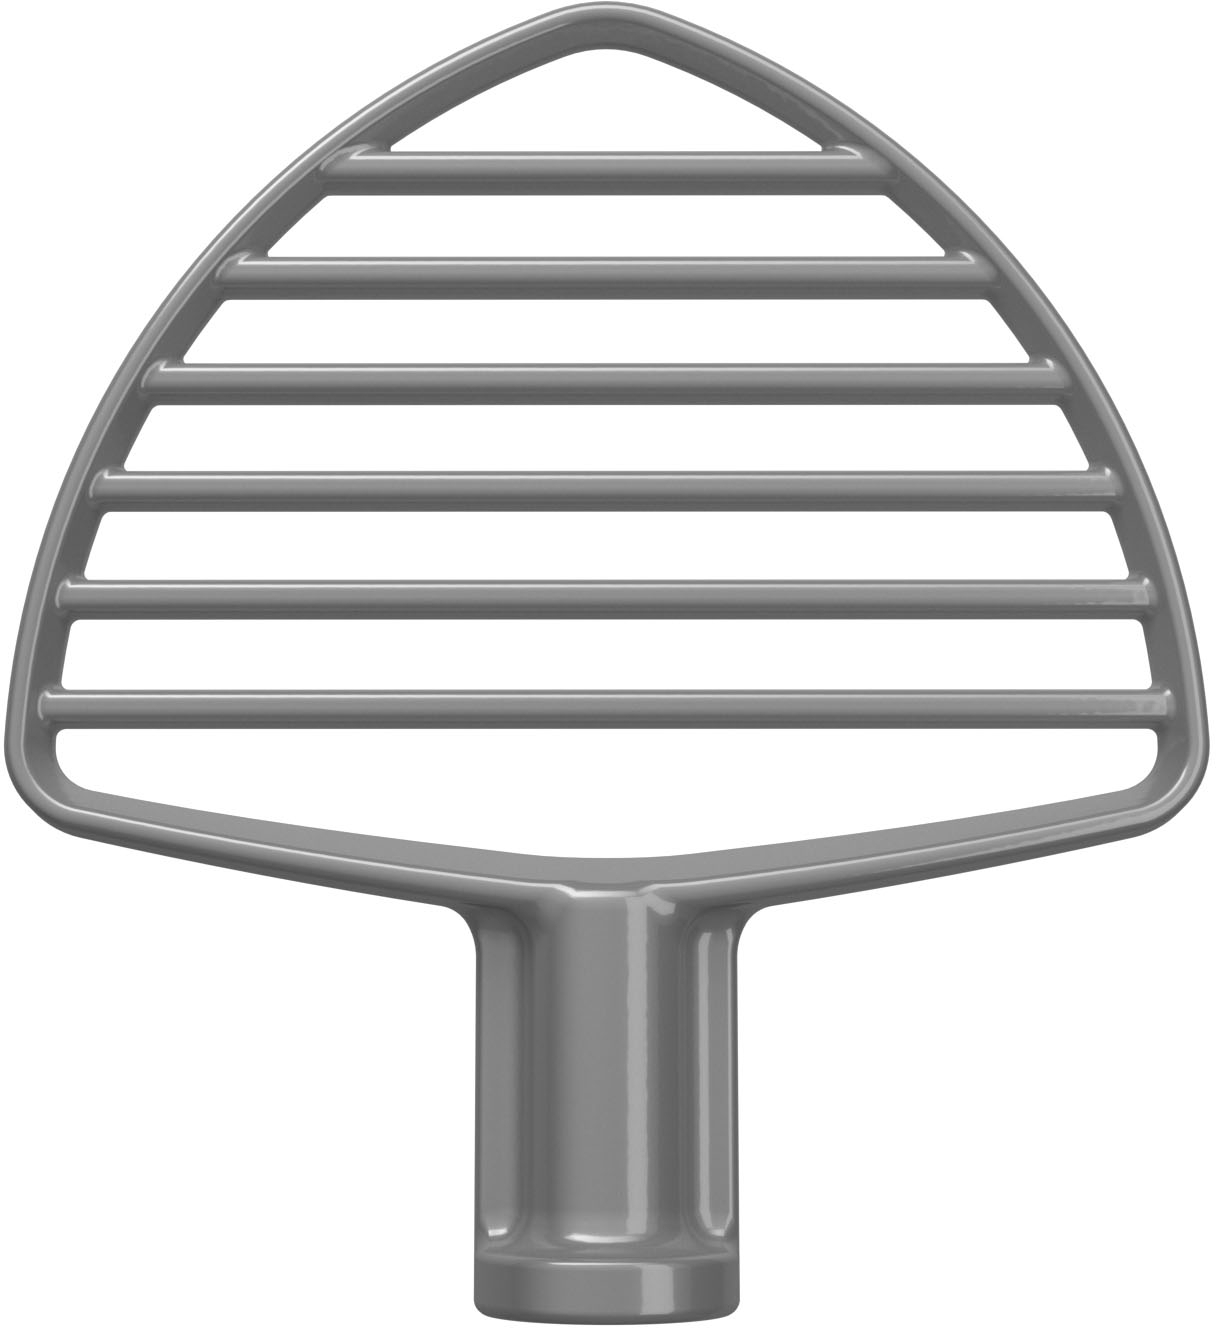 KitchenAid 6-Quart Stainless Steel Bowl + Flex Edge Accessory Pack | Fits  KitchenAid 6-Quart Bowl-Lift Stand Mixers